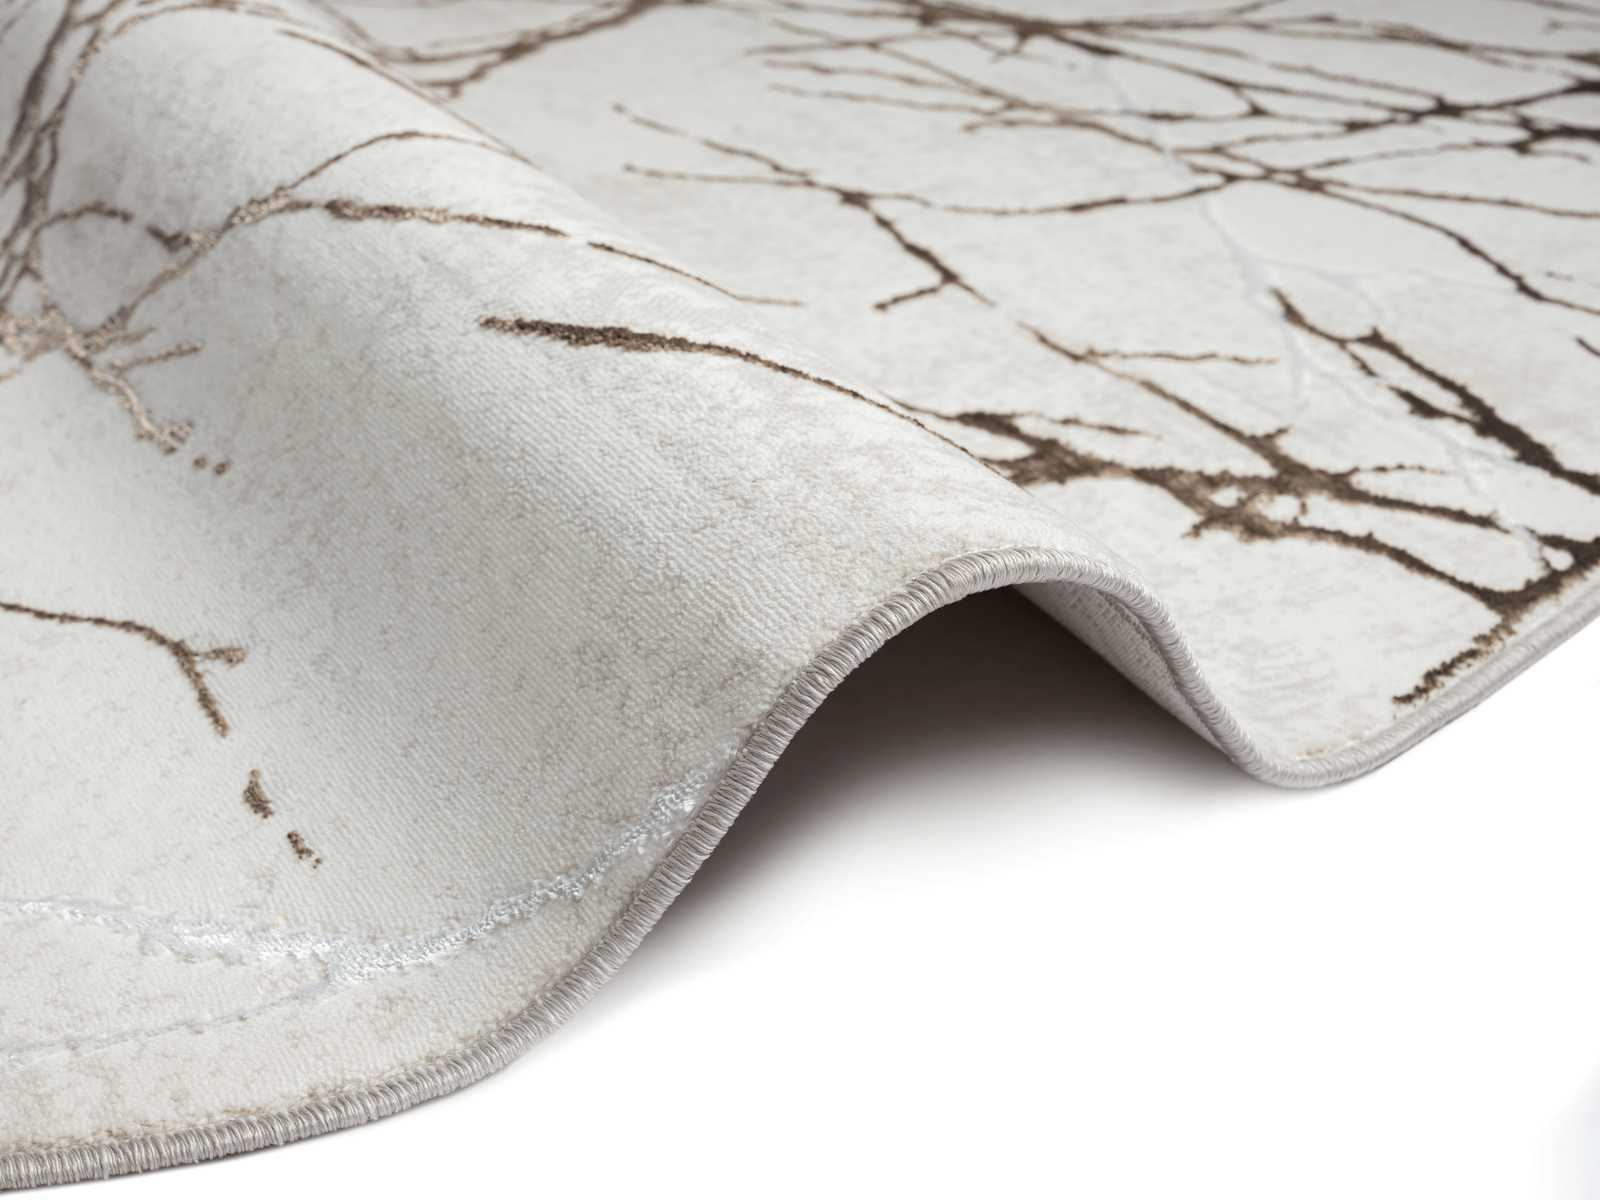             Pluizig hoogpolig tapijt in crème - 170 x 120 cm
        